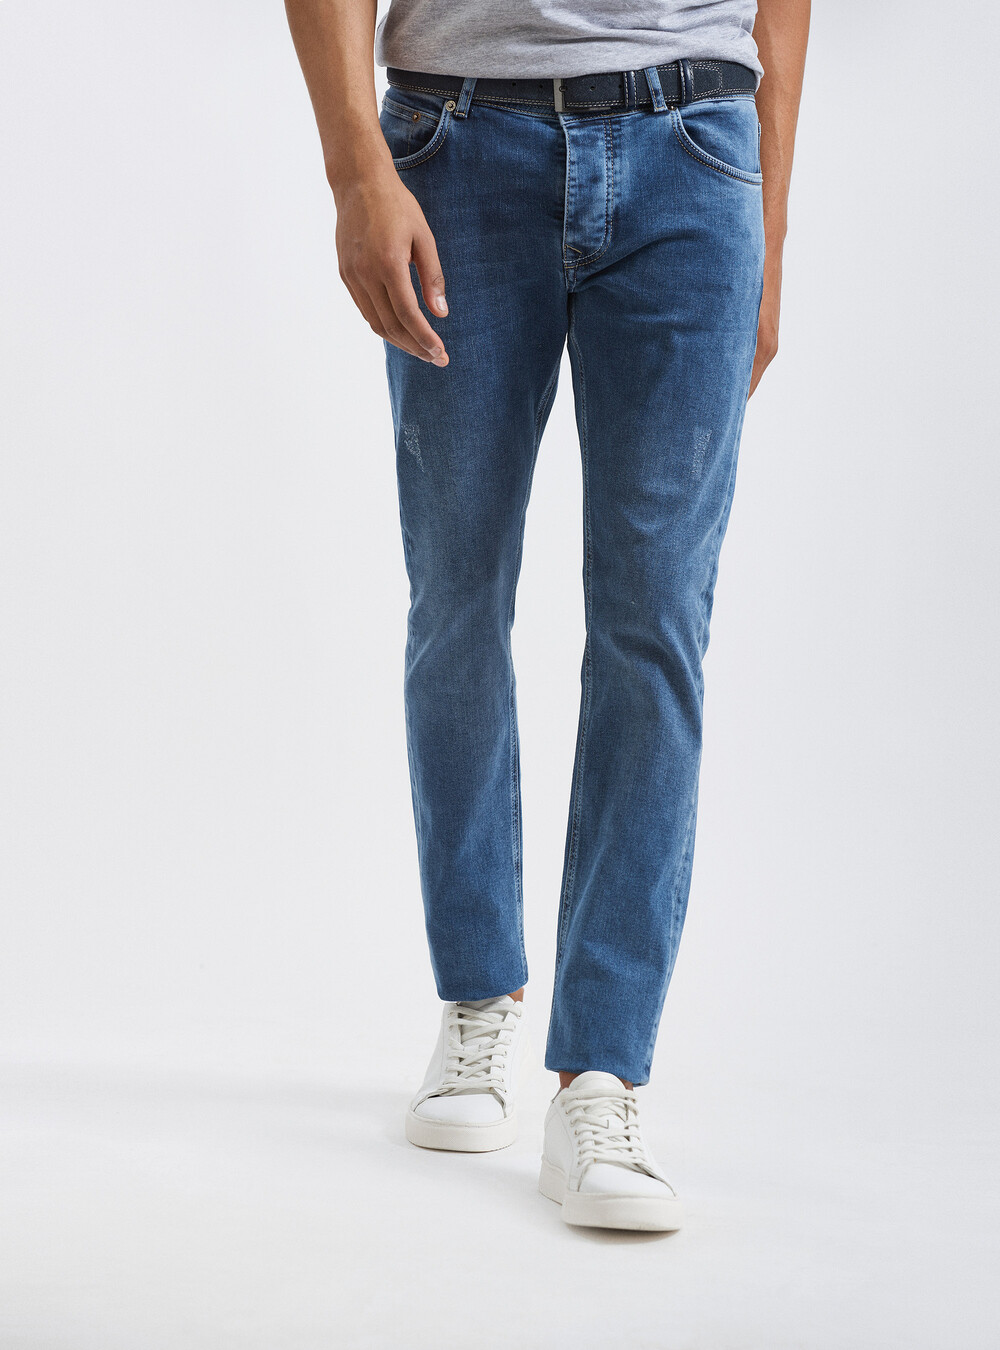 5-pocket jeans with rips | GutteridgeUS | catalog-gutteridge-storefront Uomo